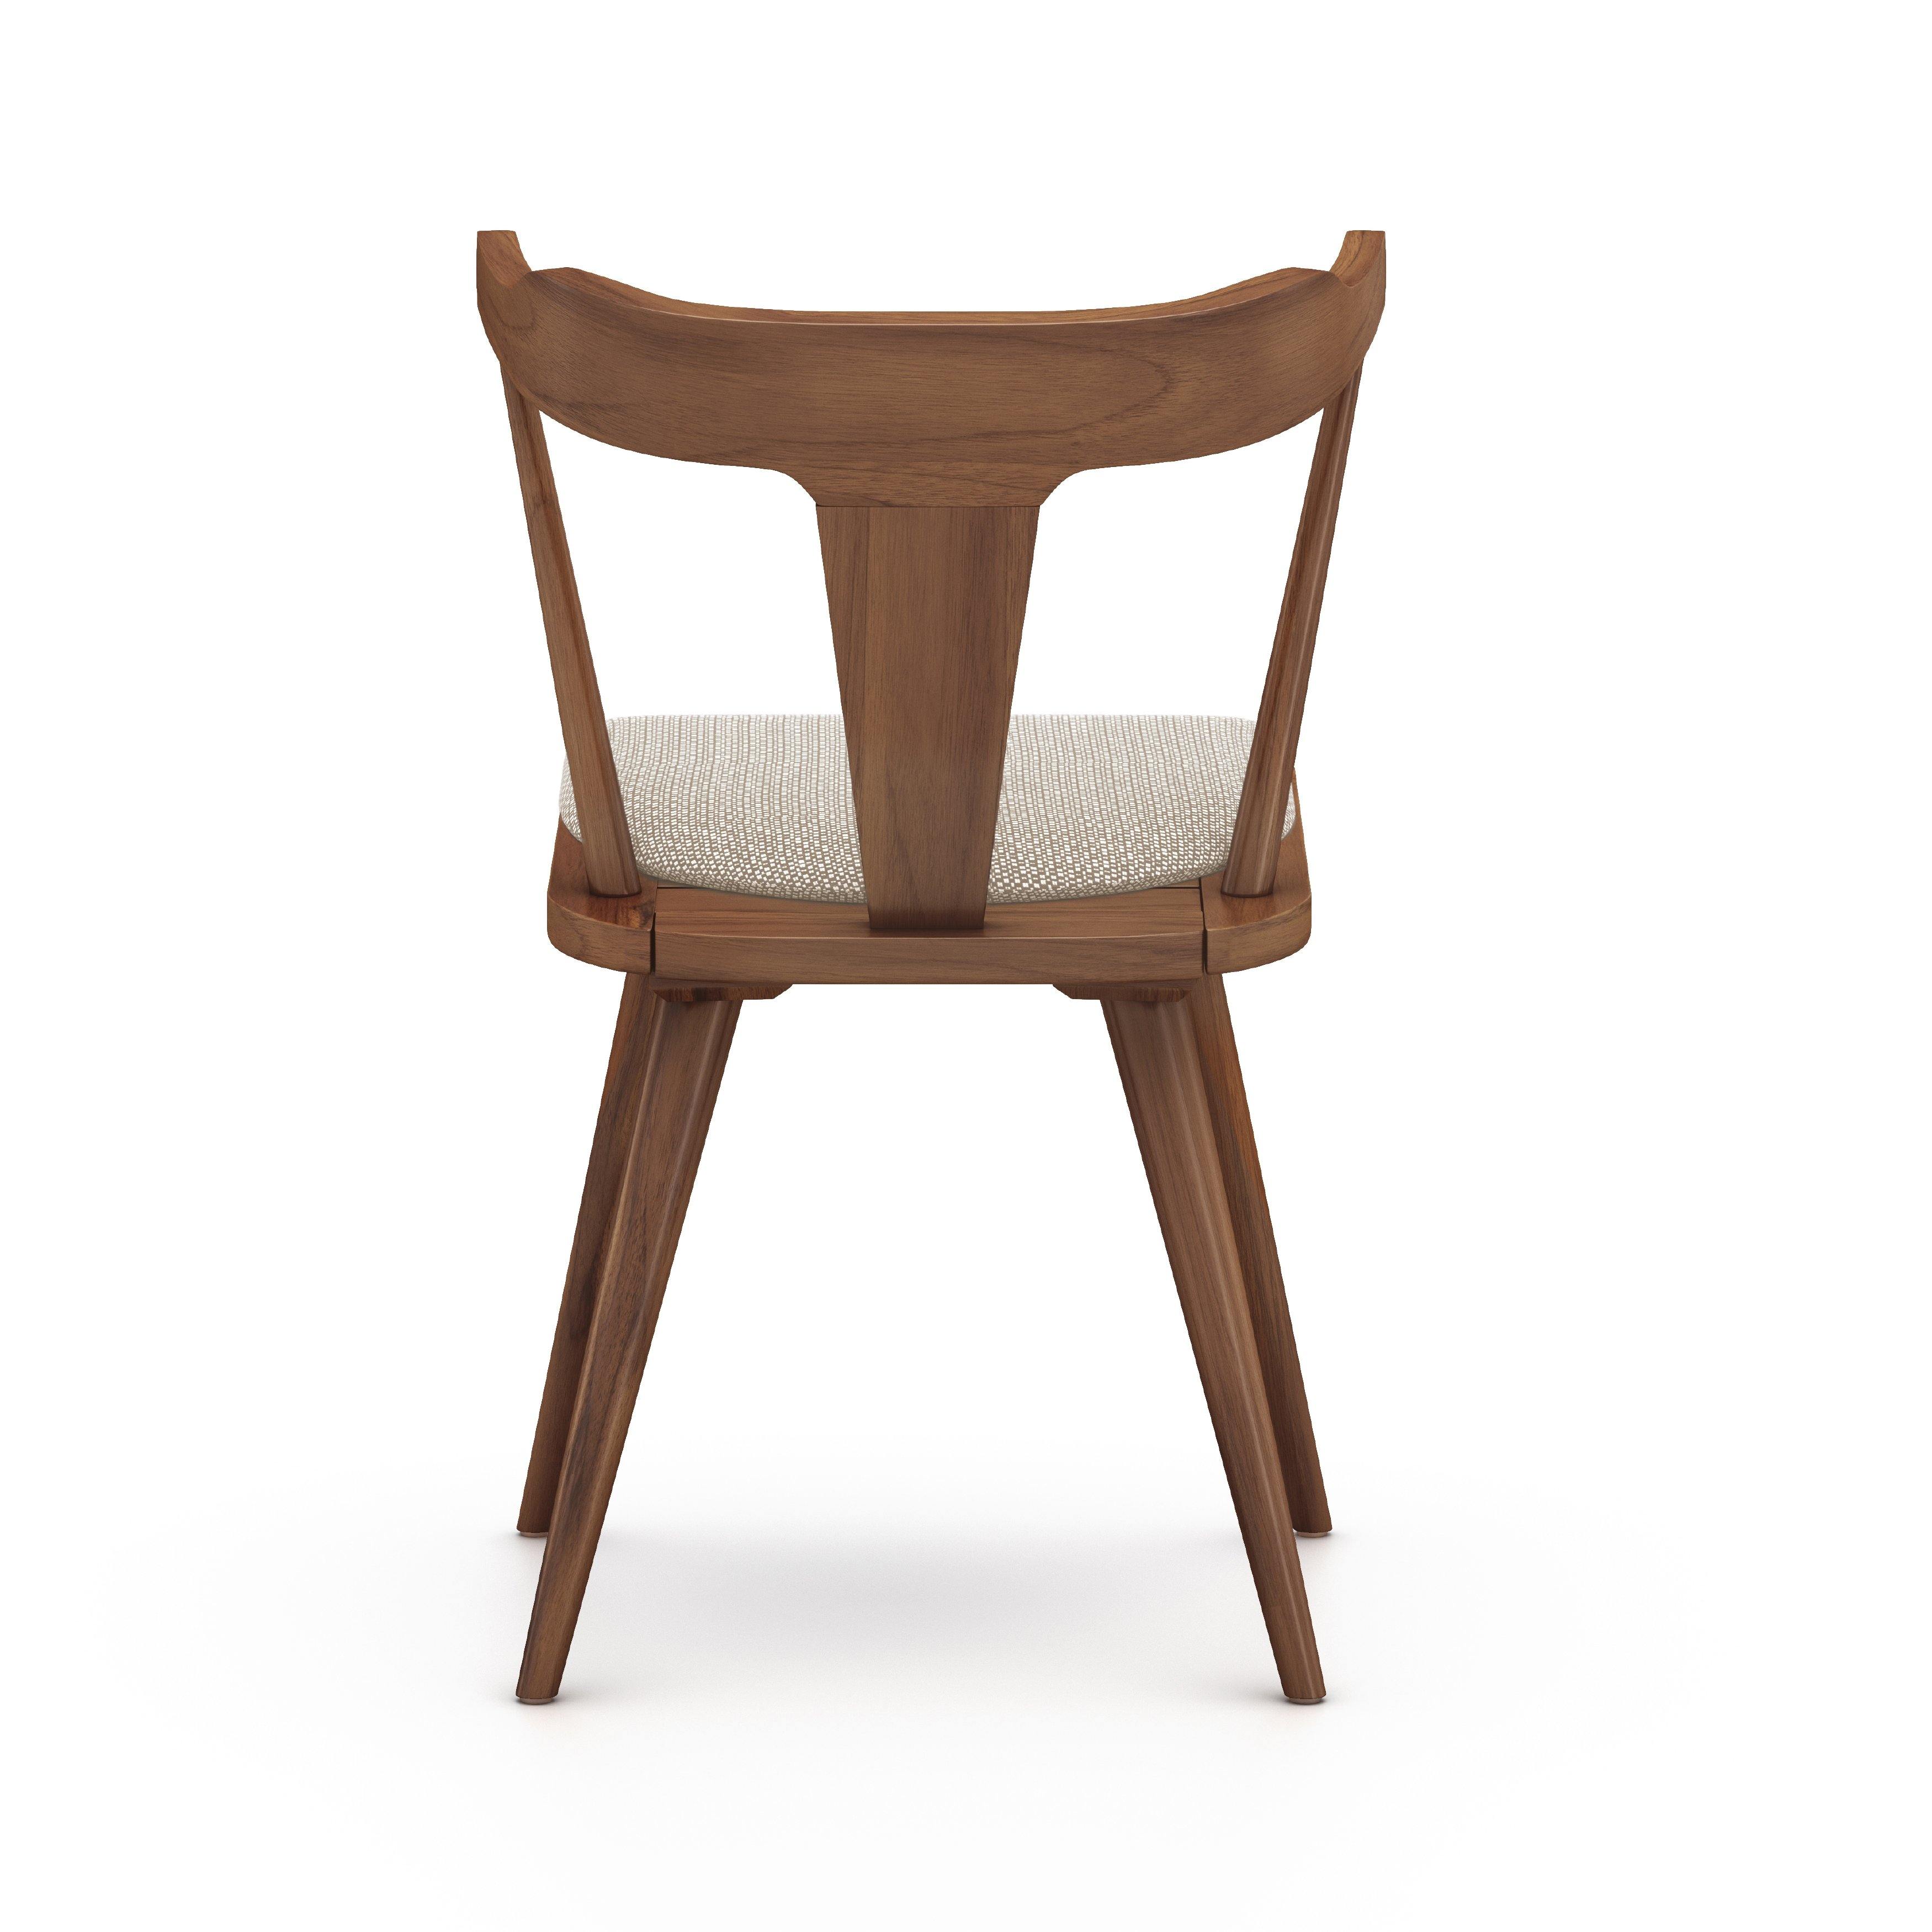 Coleson Outdoor Dining Chair - Reimagine Designs - Outdoor, outdoor armchair, Outdoor Armchairs, outdoor chair, outdoor dining table